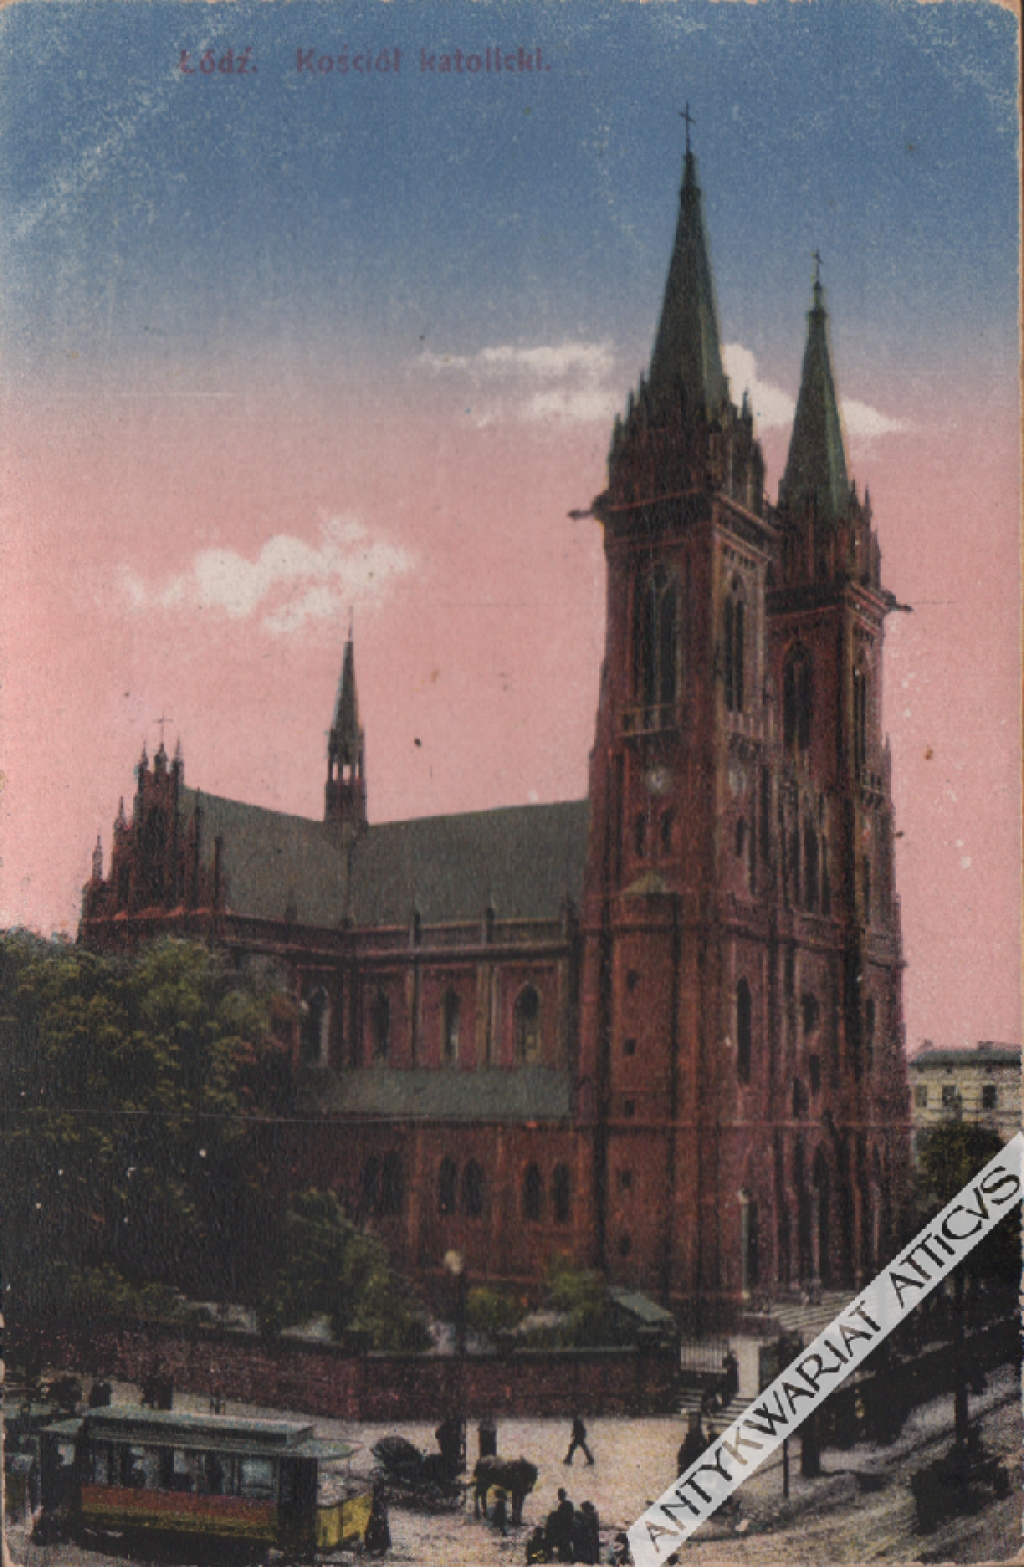 [pocztówka, lata 1920-te] Łódź. Kościół katolicki